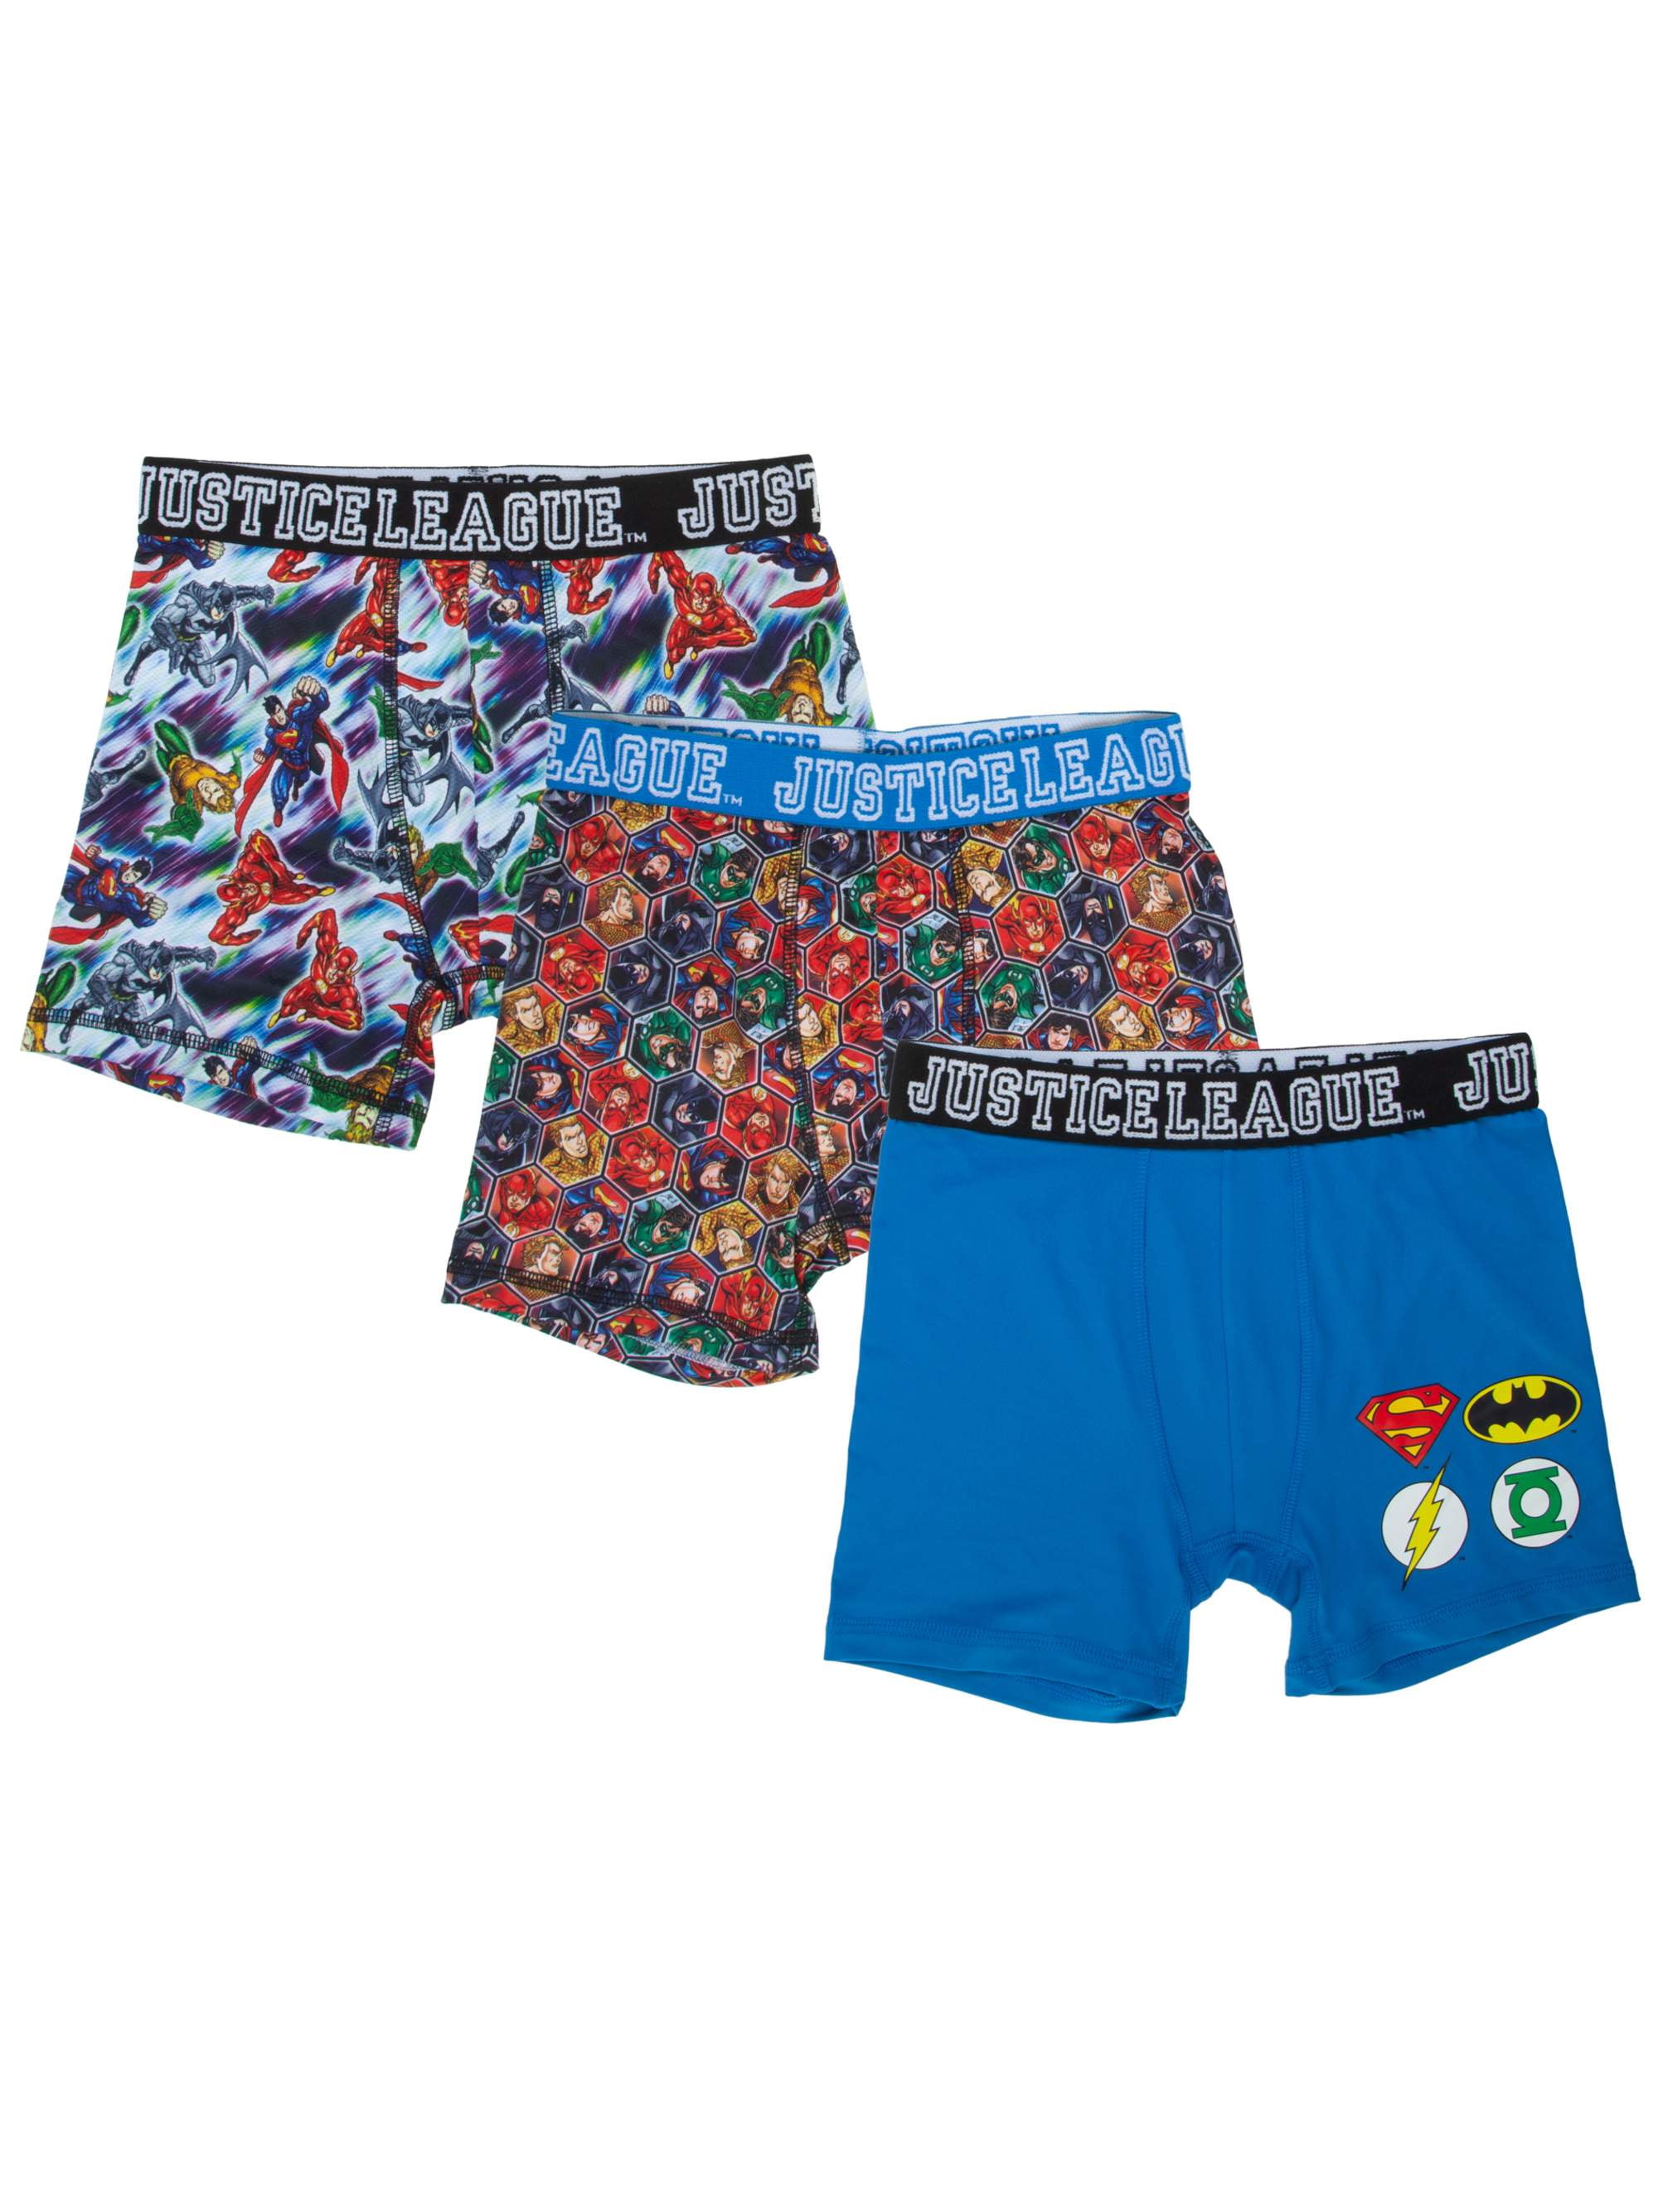 M 8 or L 10 S 6 New Boys Underwear DC Justice League 3 pack boxer briefs XS 4 